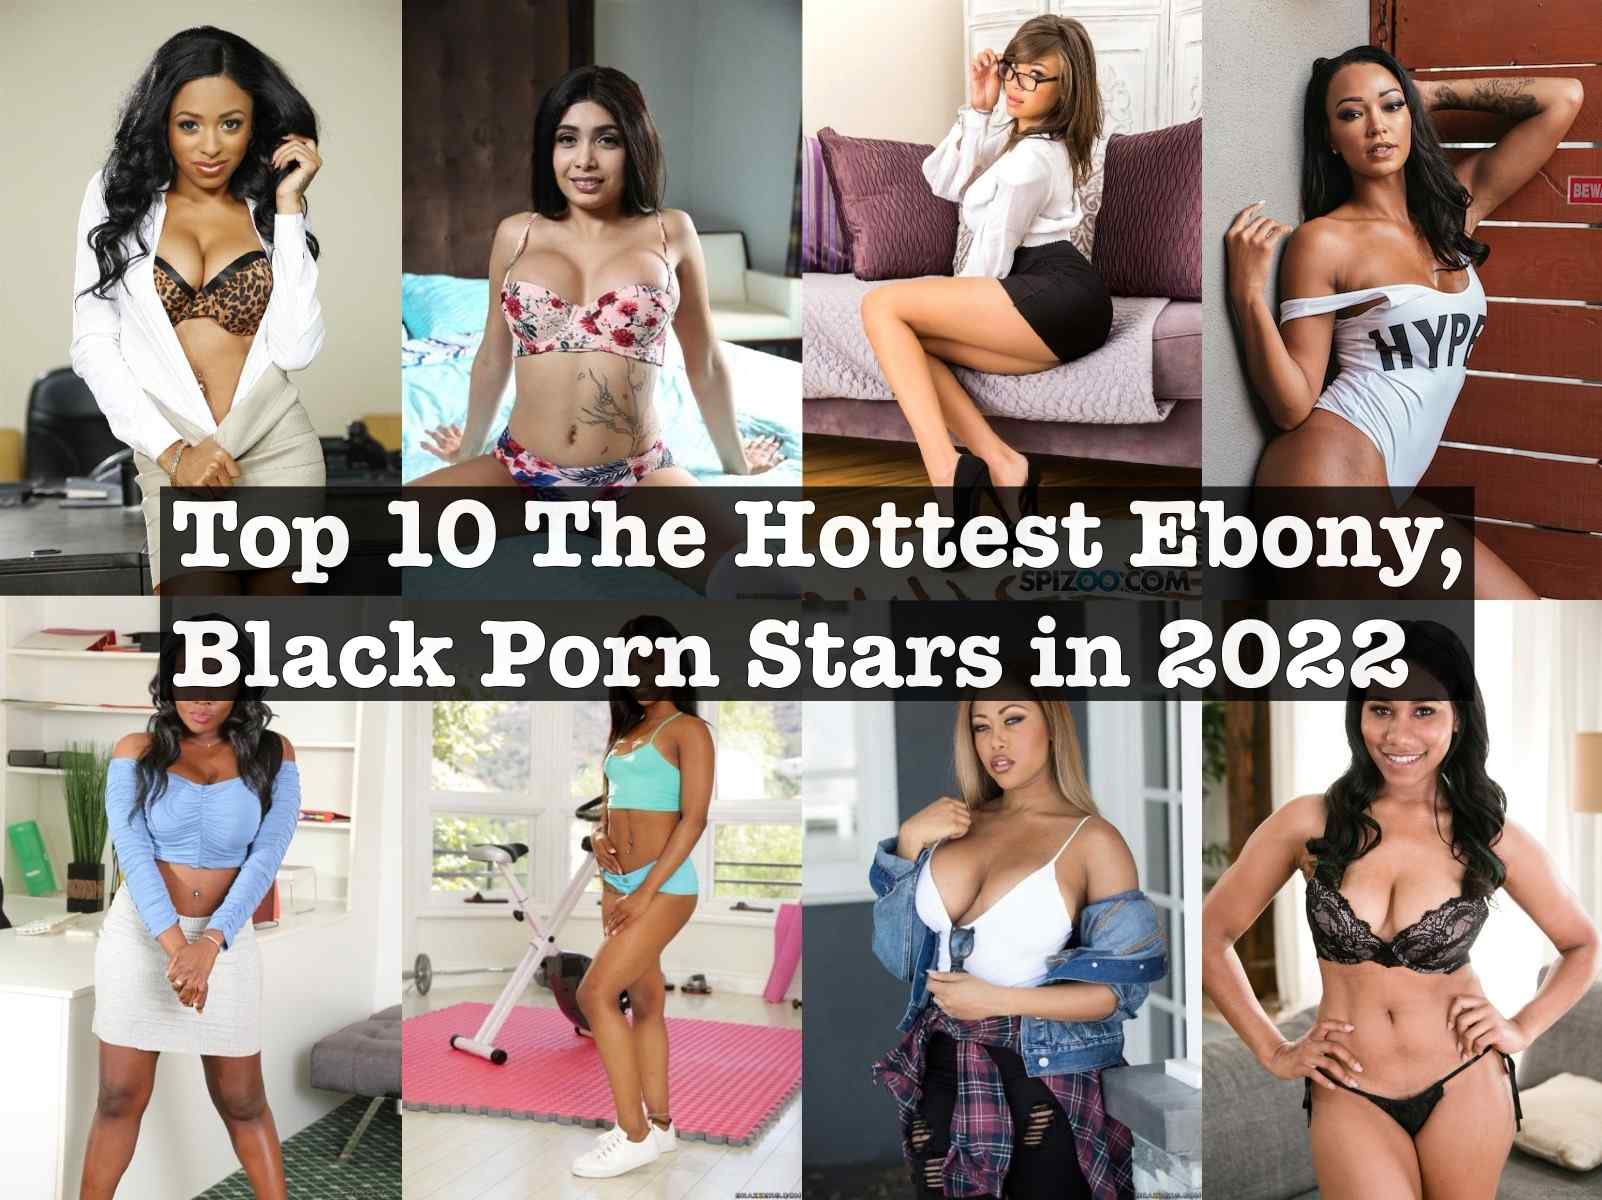 10 Famous Ebony Porn Stars - Top Black Porn Stars in 2022 | Best 10 Hottest Ebony